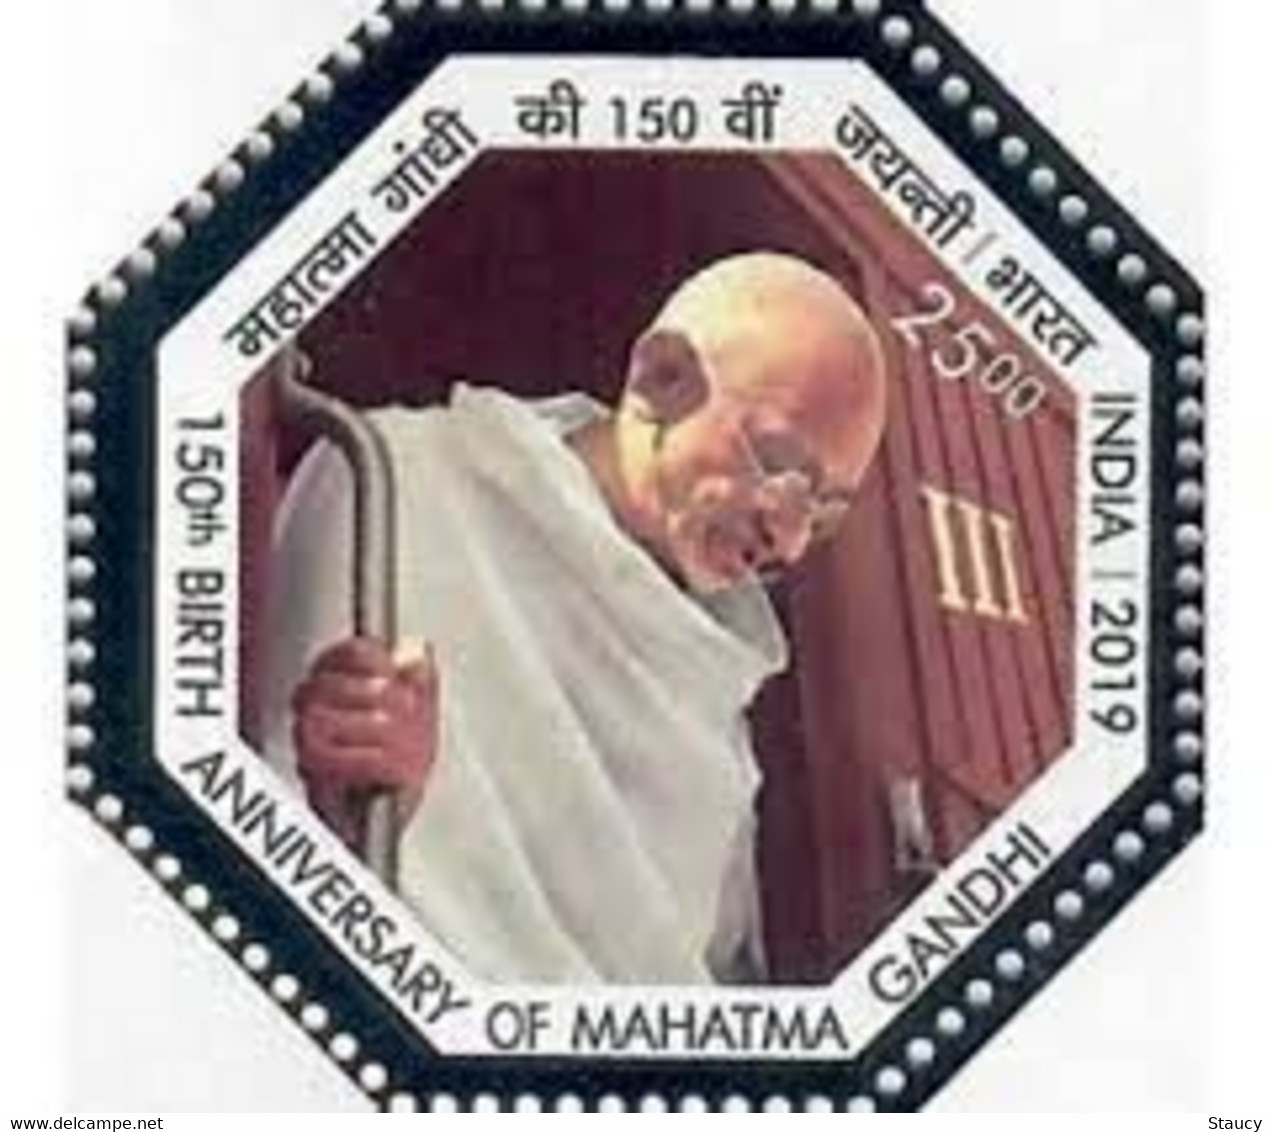 INDIA 2019 150th Birth Anniversary Of Mahatma Gandhi (Octagonal Silver Bordered) Rs.25.00 1v STAMP MNH P.O Fresh&Fine - Fouten Op Zegels